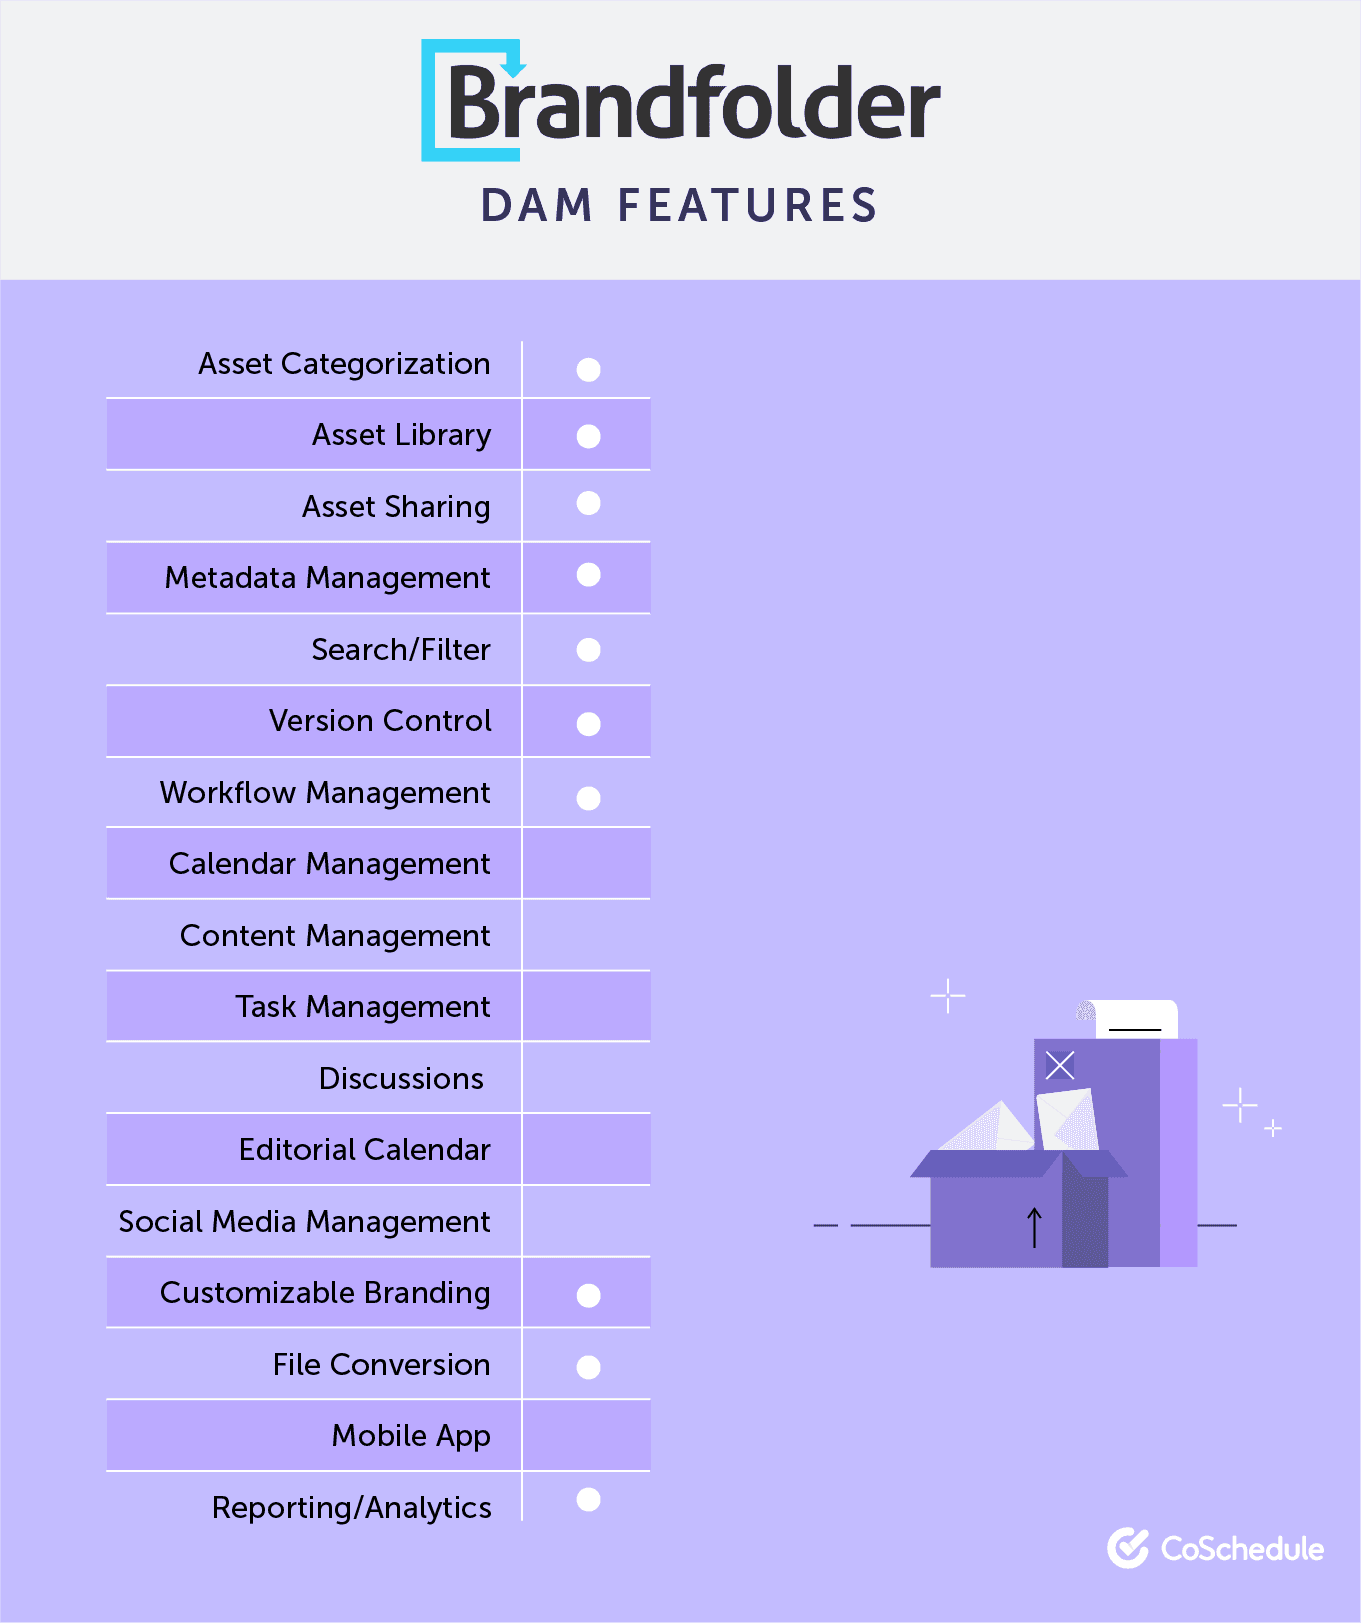 Brandfolder DAM Features